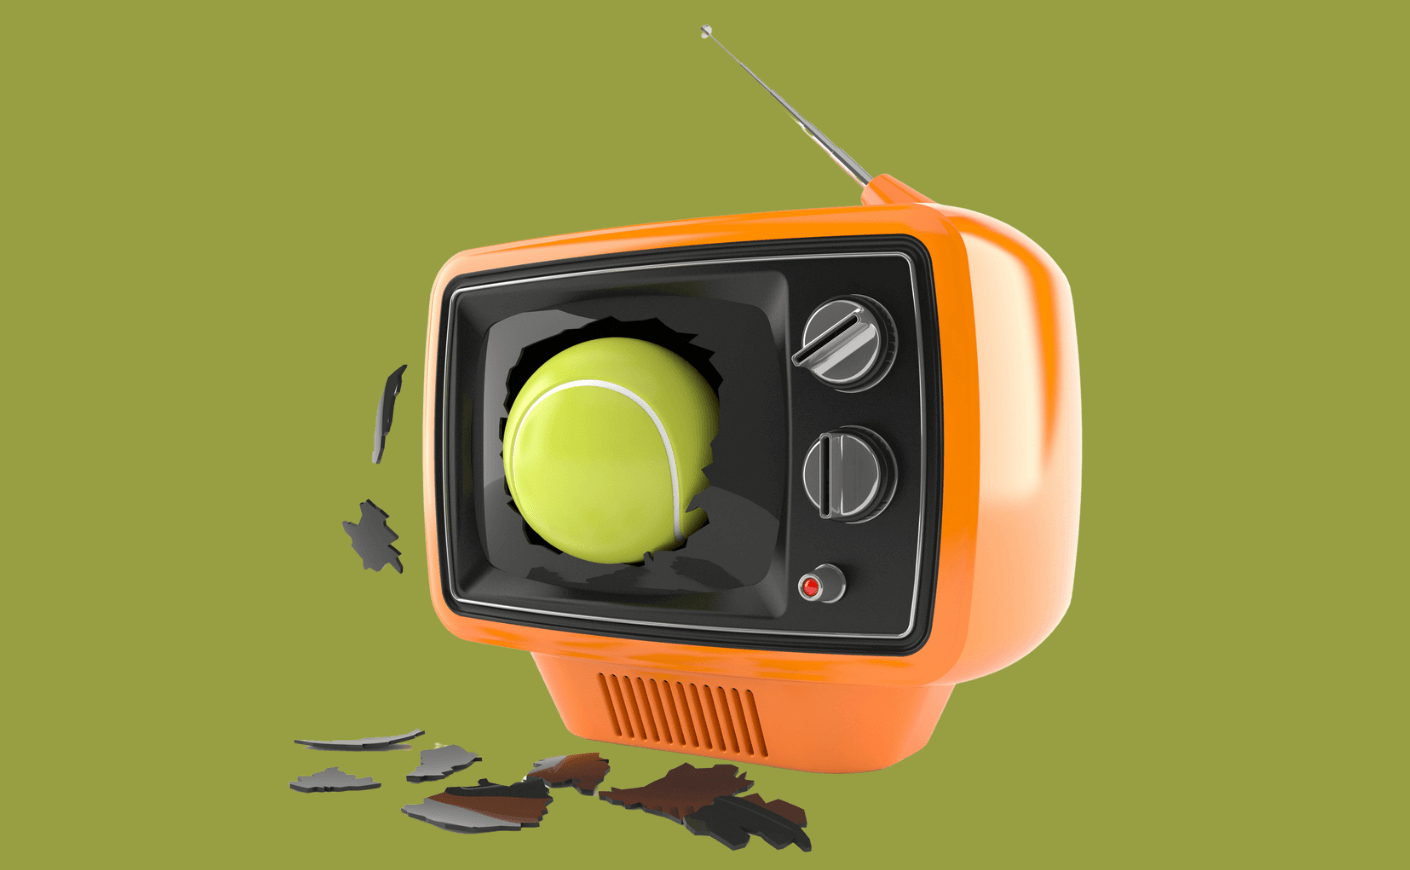 tennis ball smashing a TV screen